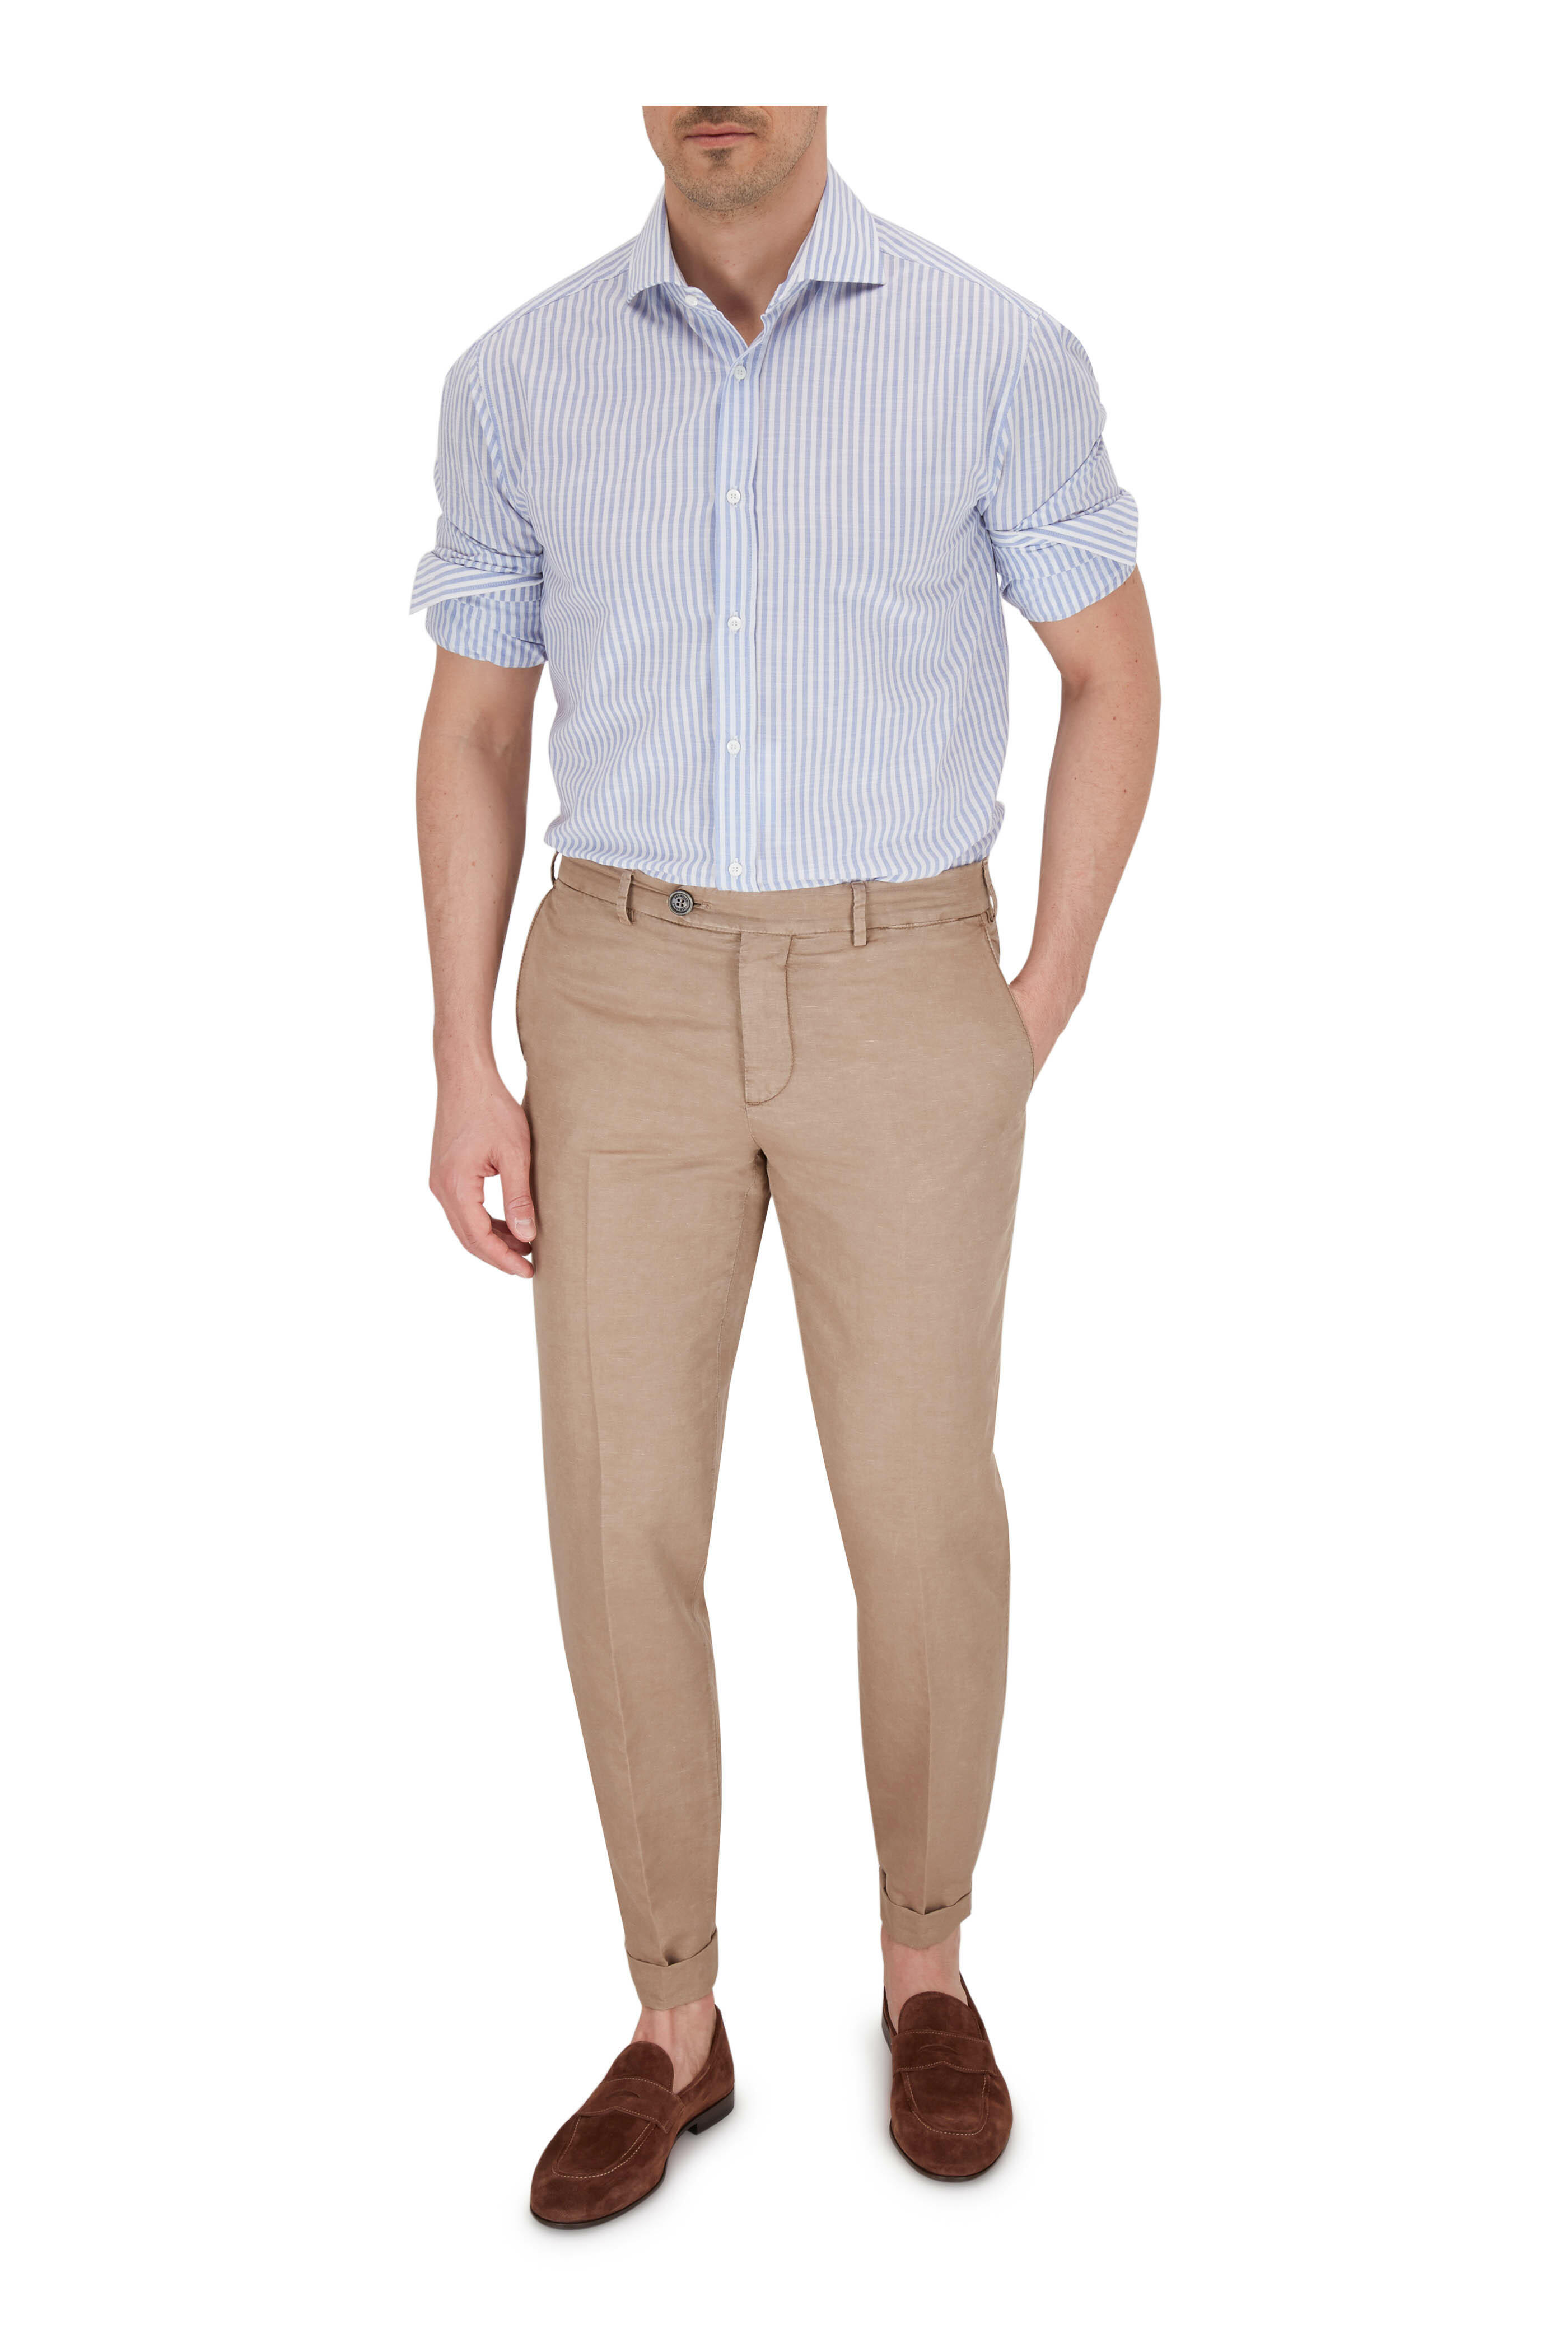 Brunello Cucinelli - Brown Linen & Cotton Flat Front Italian Fit Pant